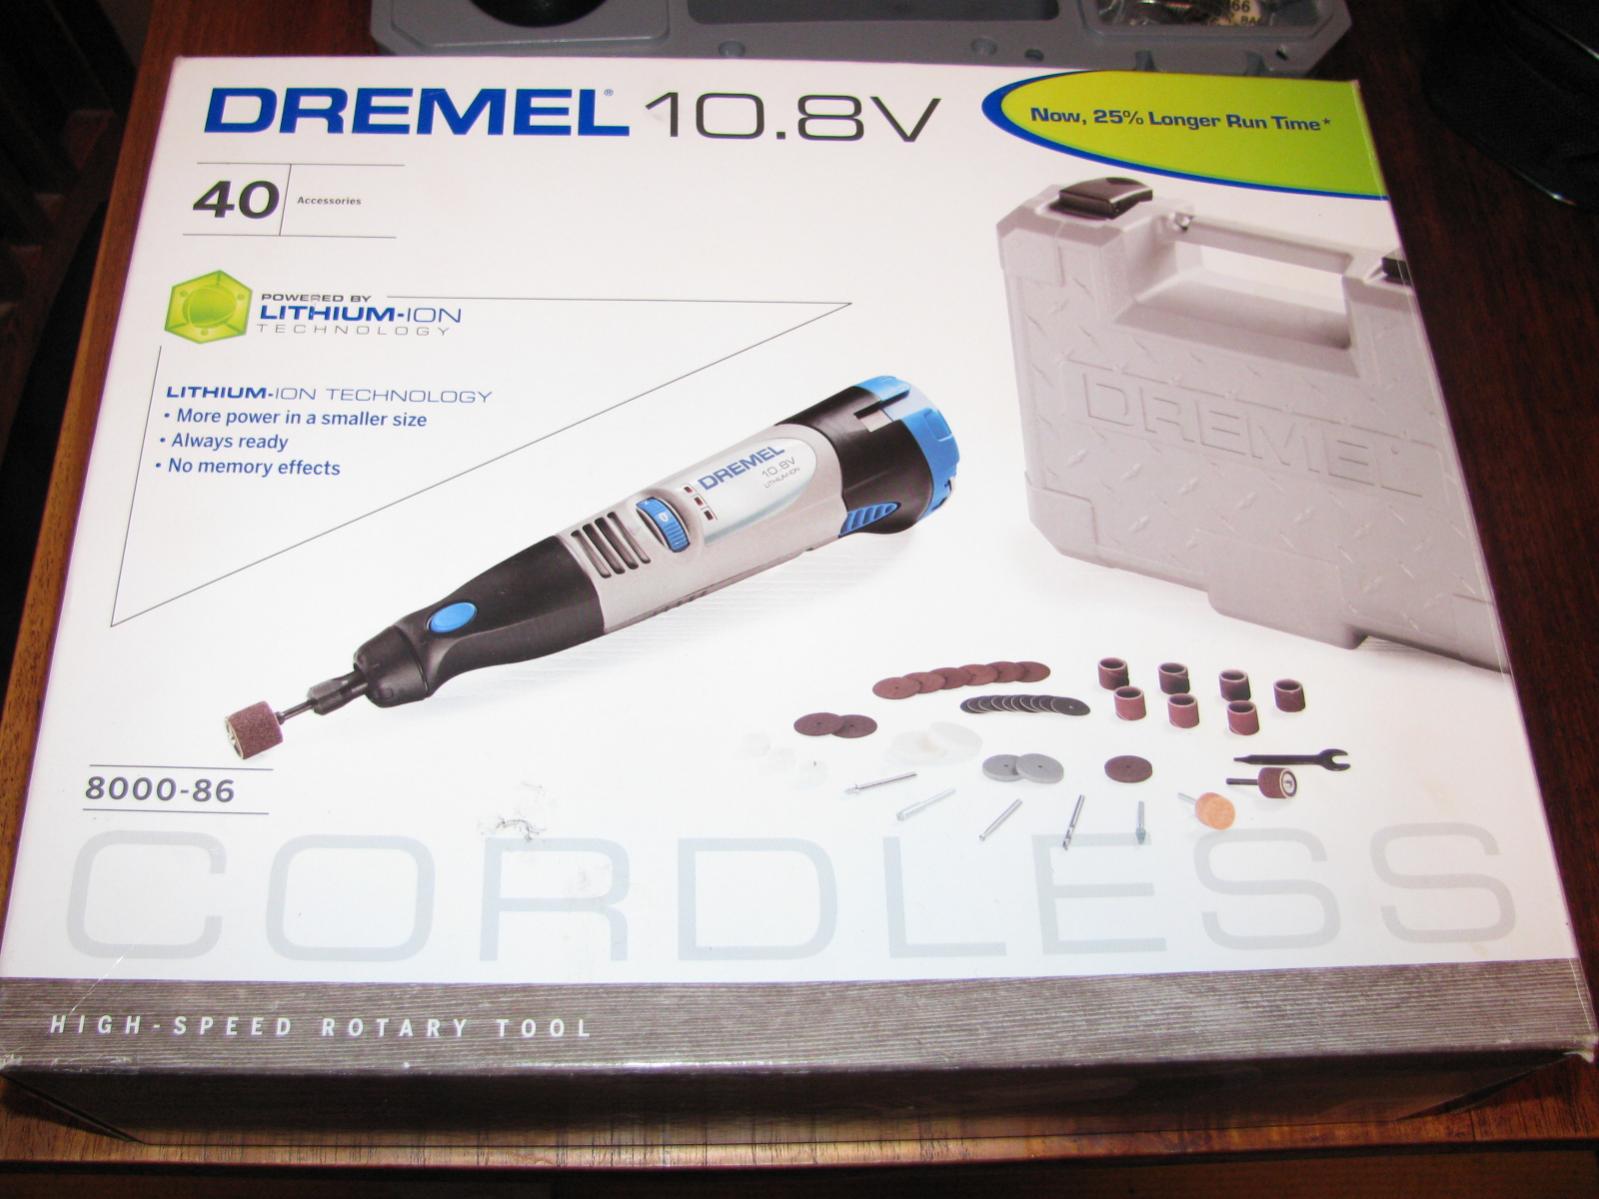 DREMEL 10.8V CORDLESS ROTARY TOOL - R/C Tech Forums